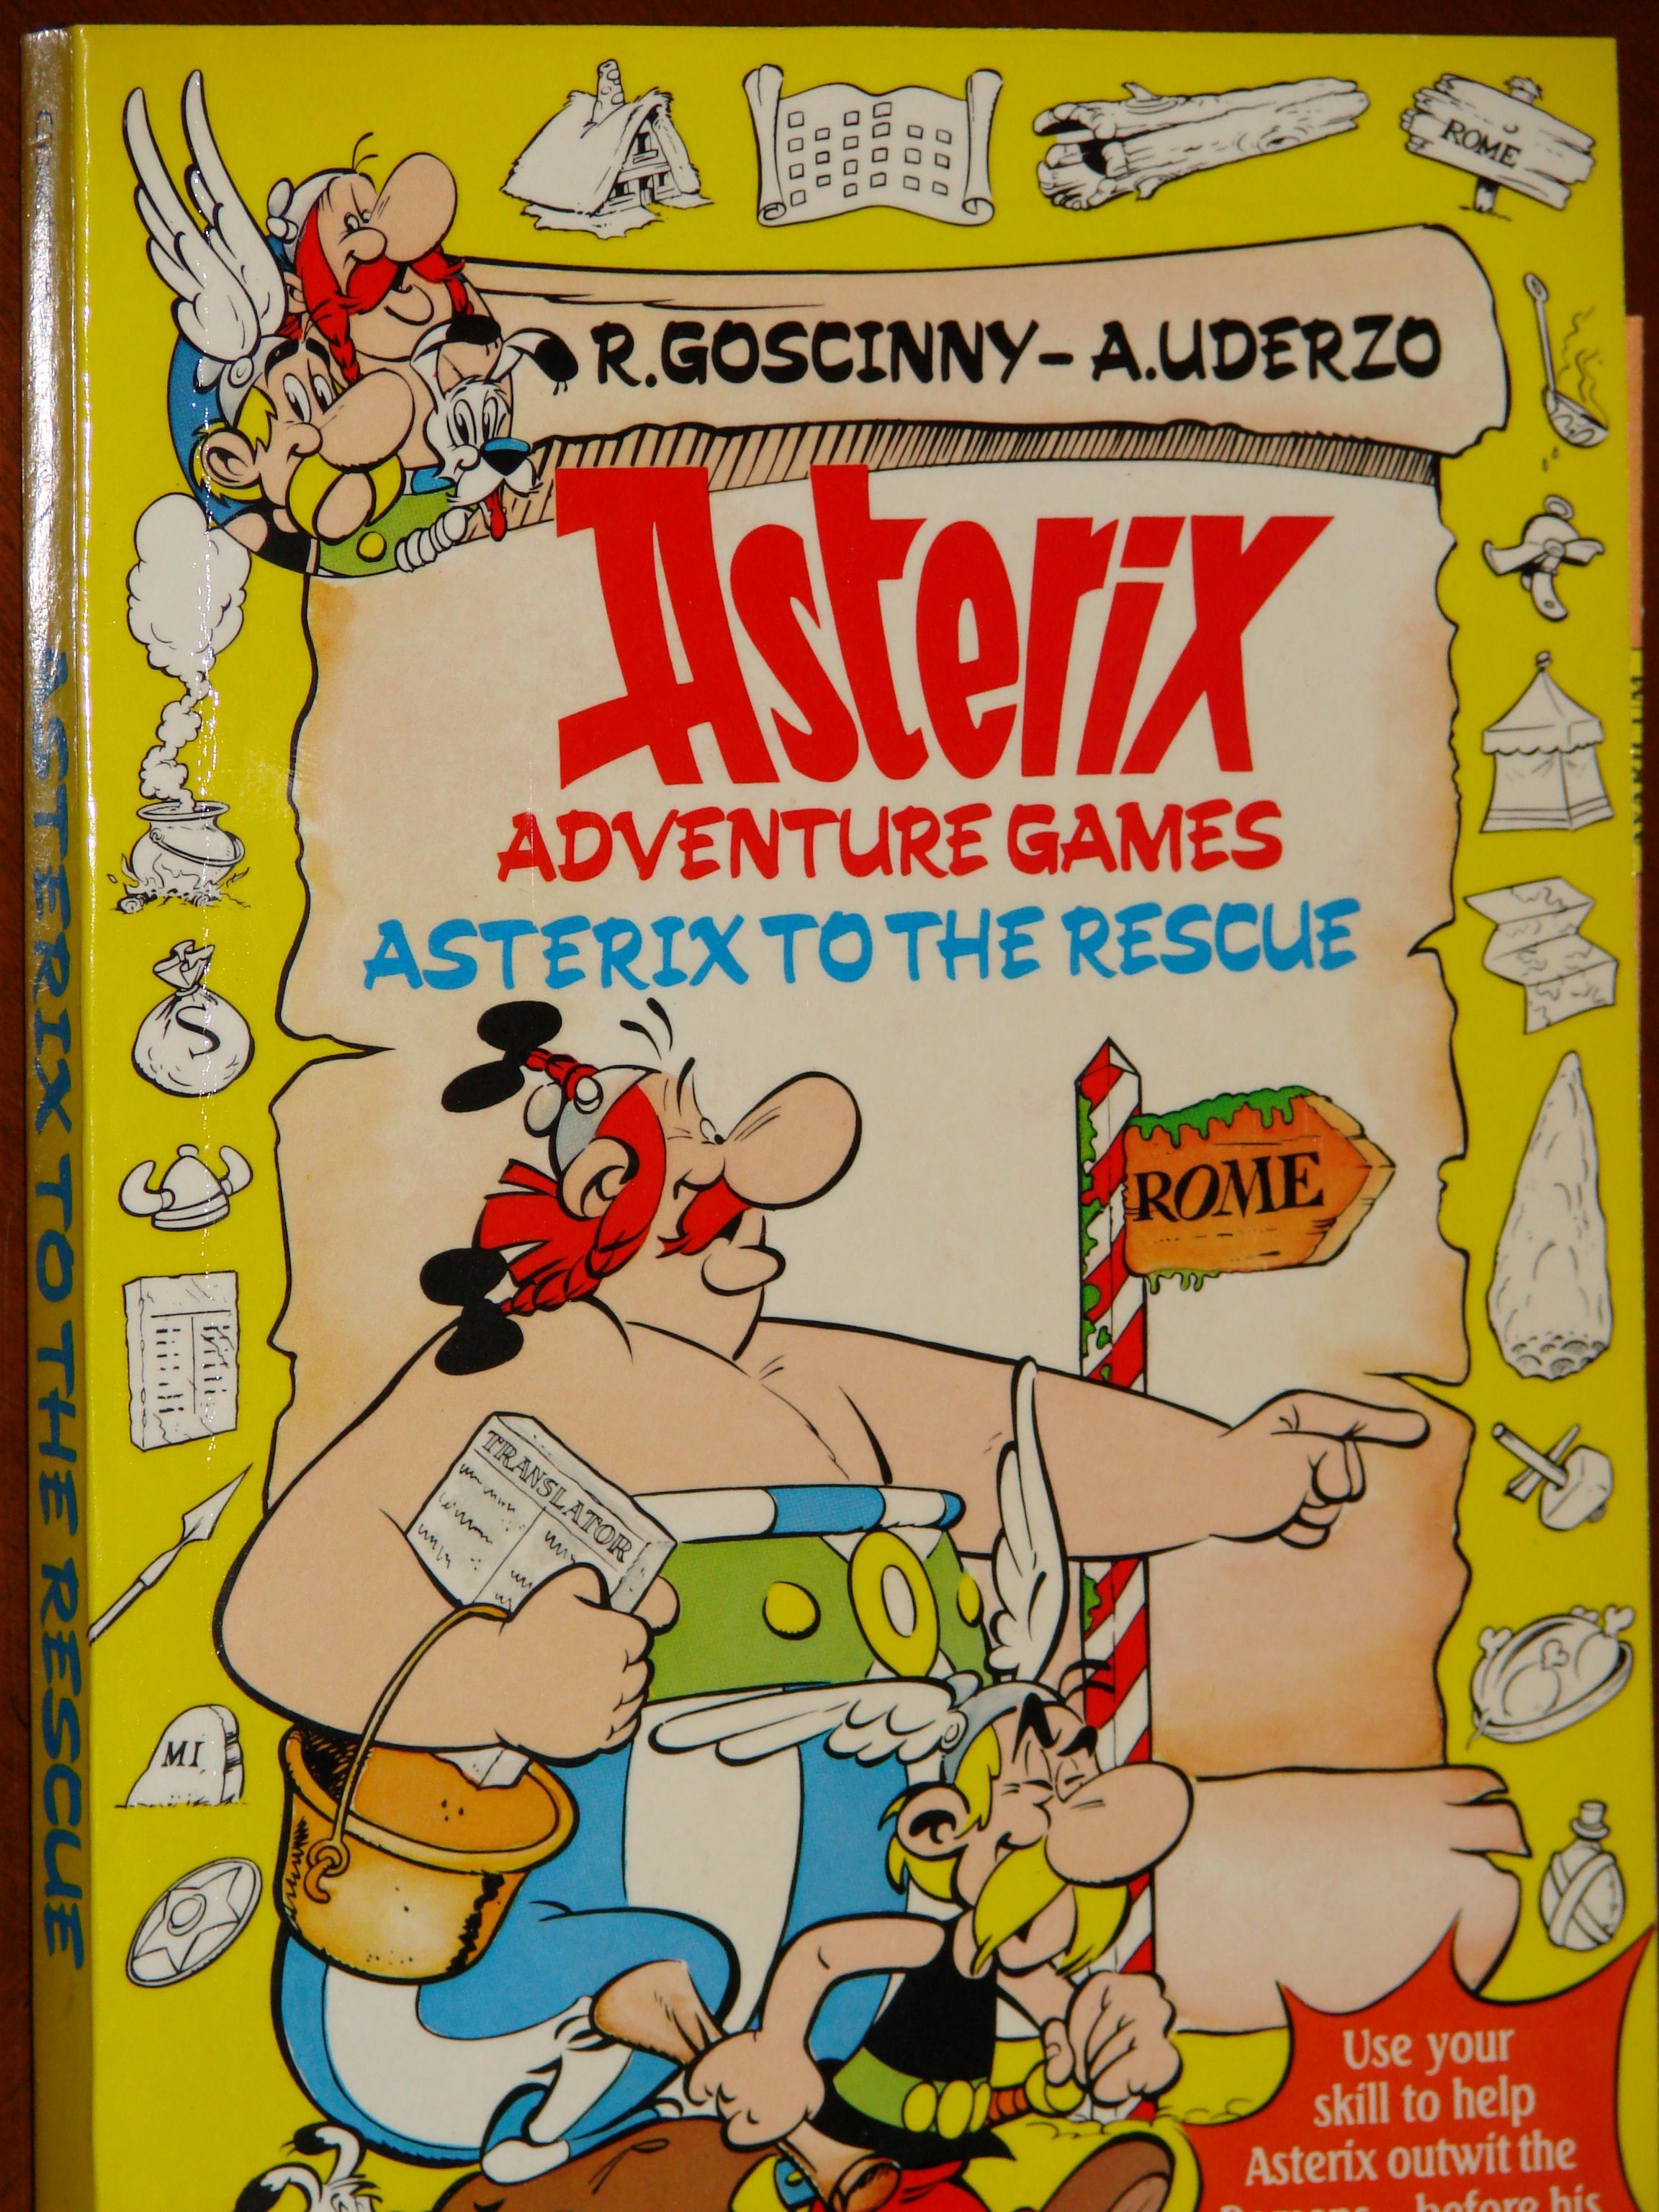 Asterix to the Rescue